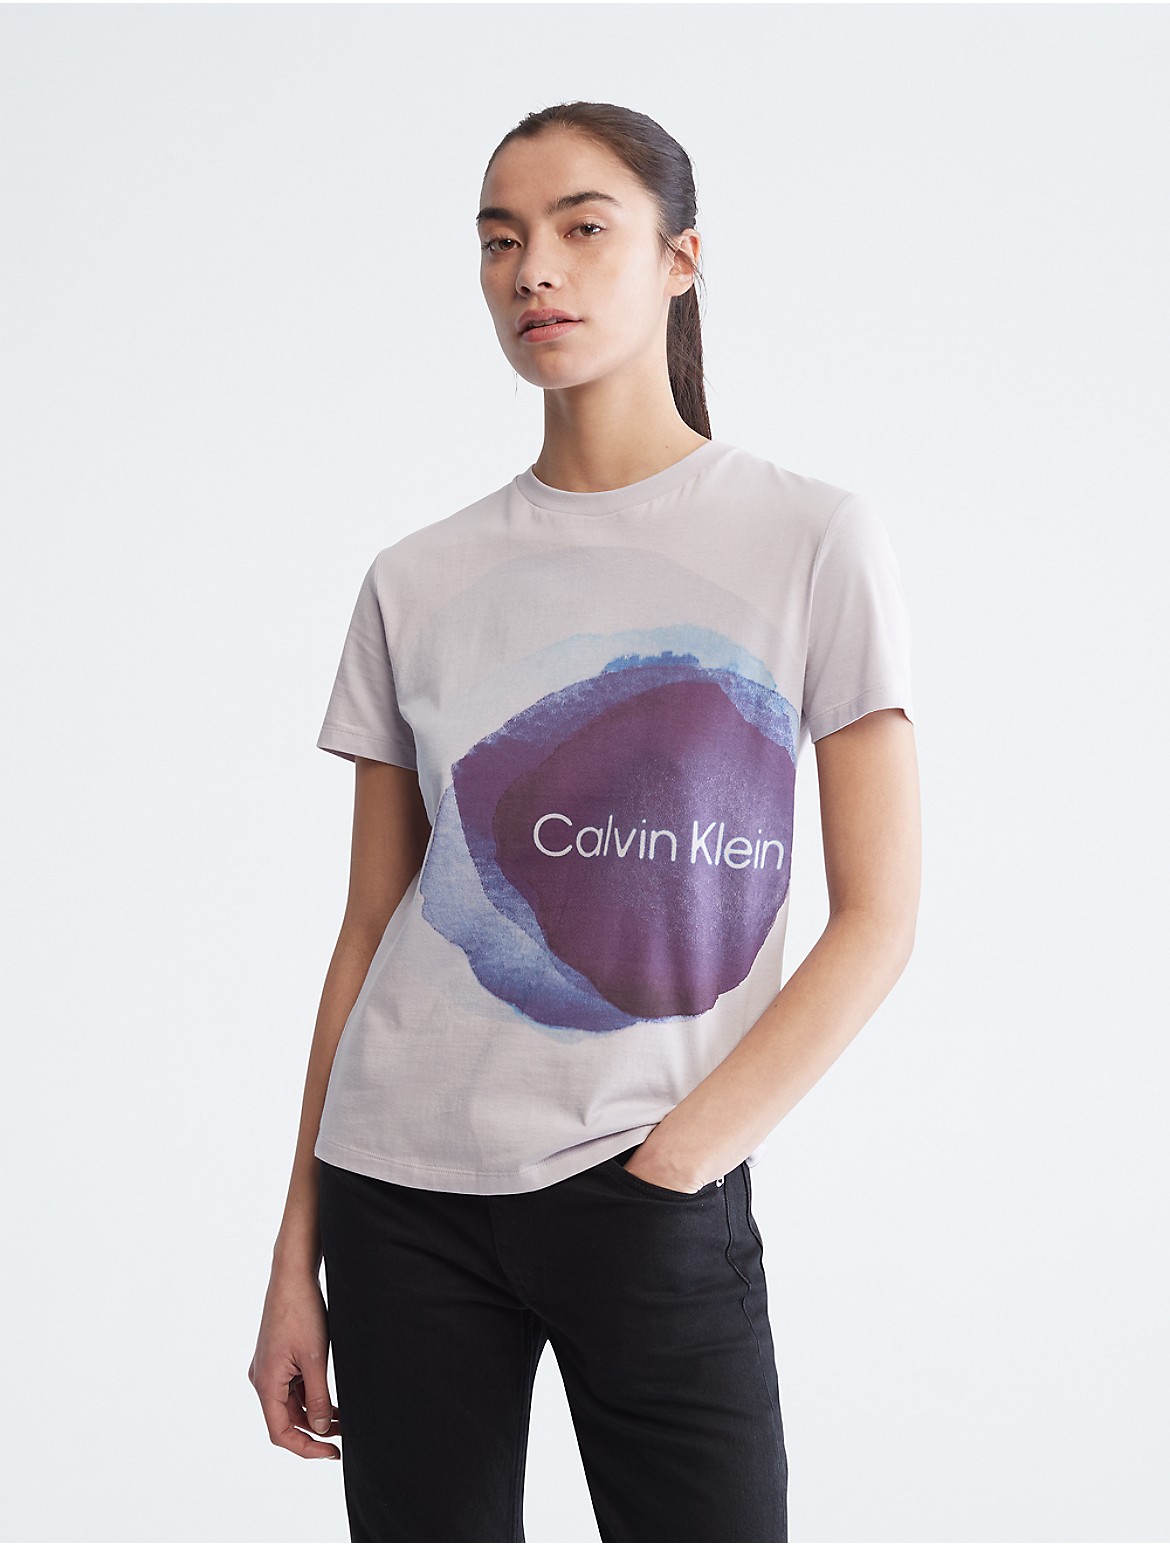 Calvin Klein Women's Watercolor Dot Graphic Crewneck T-Shirt - Grey - M